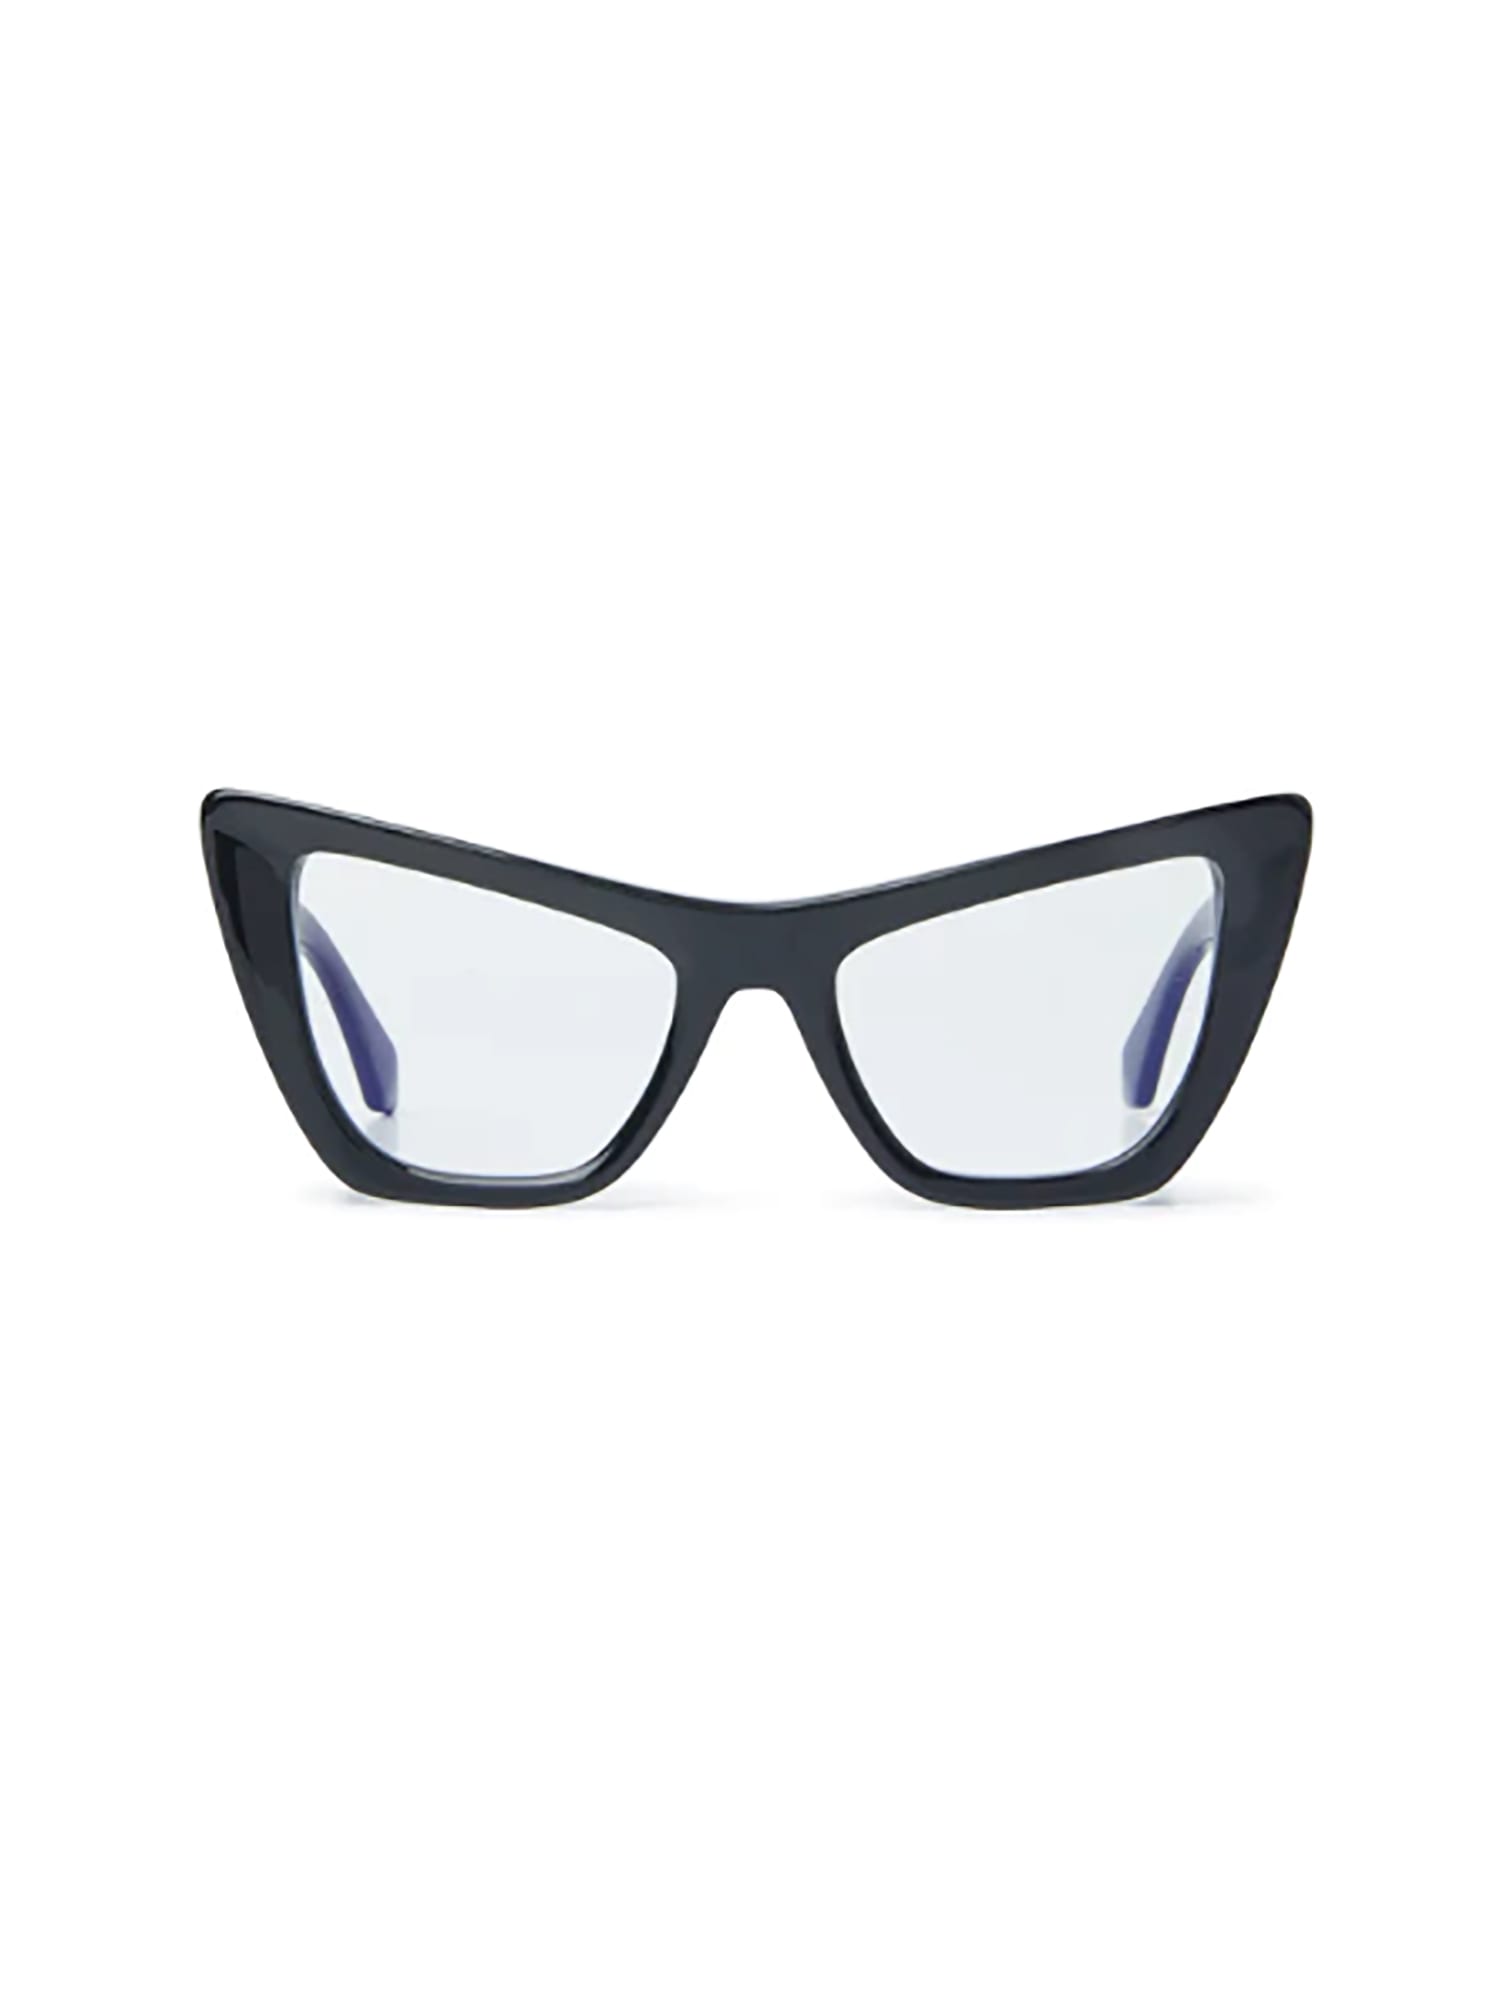 Off-White AF OPTICAL 11 BLACK BLUE BLOCK Eyewear